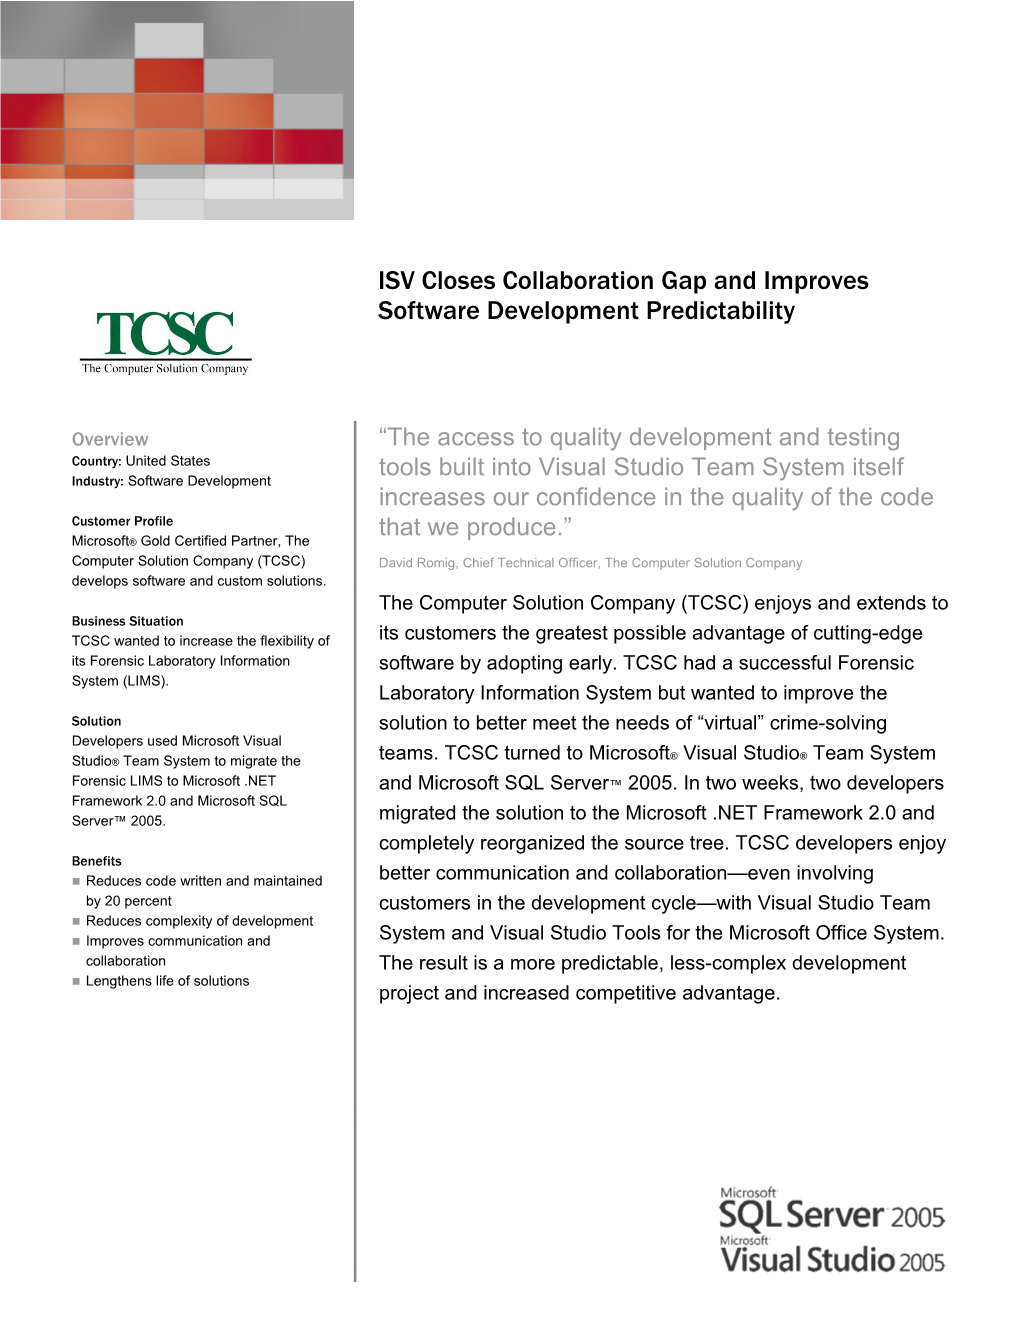 ISV Closes Collaboration Gap and Improves Software Development Predictability